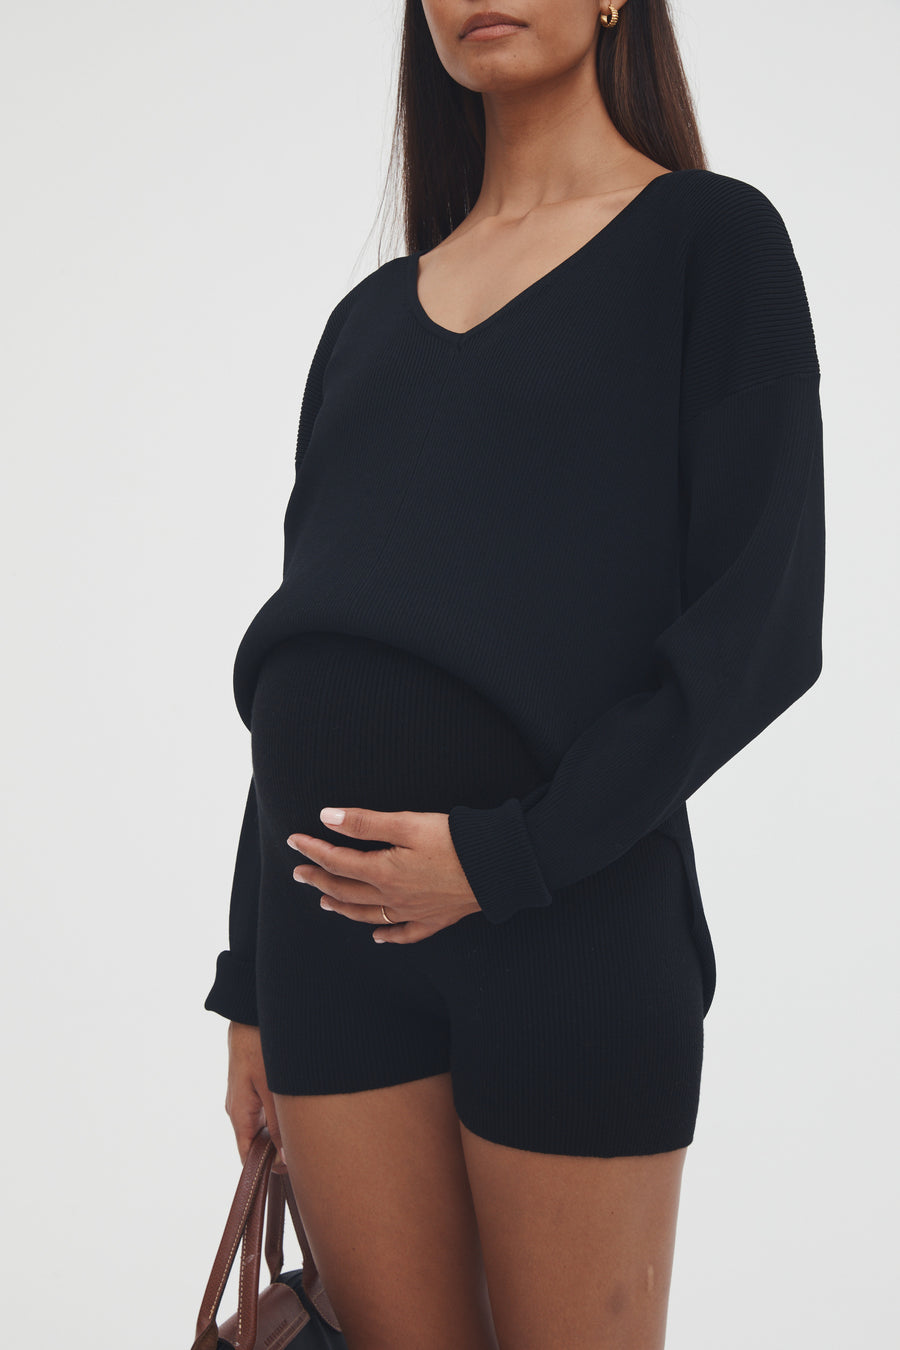 Overbump Stretchy Rib Maternity Shorts (Black) 4